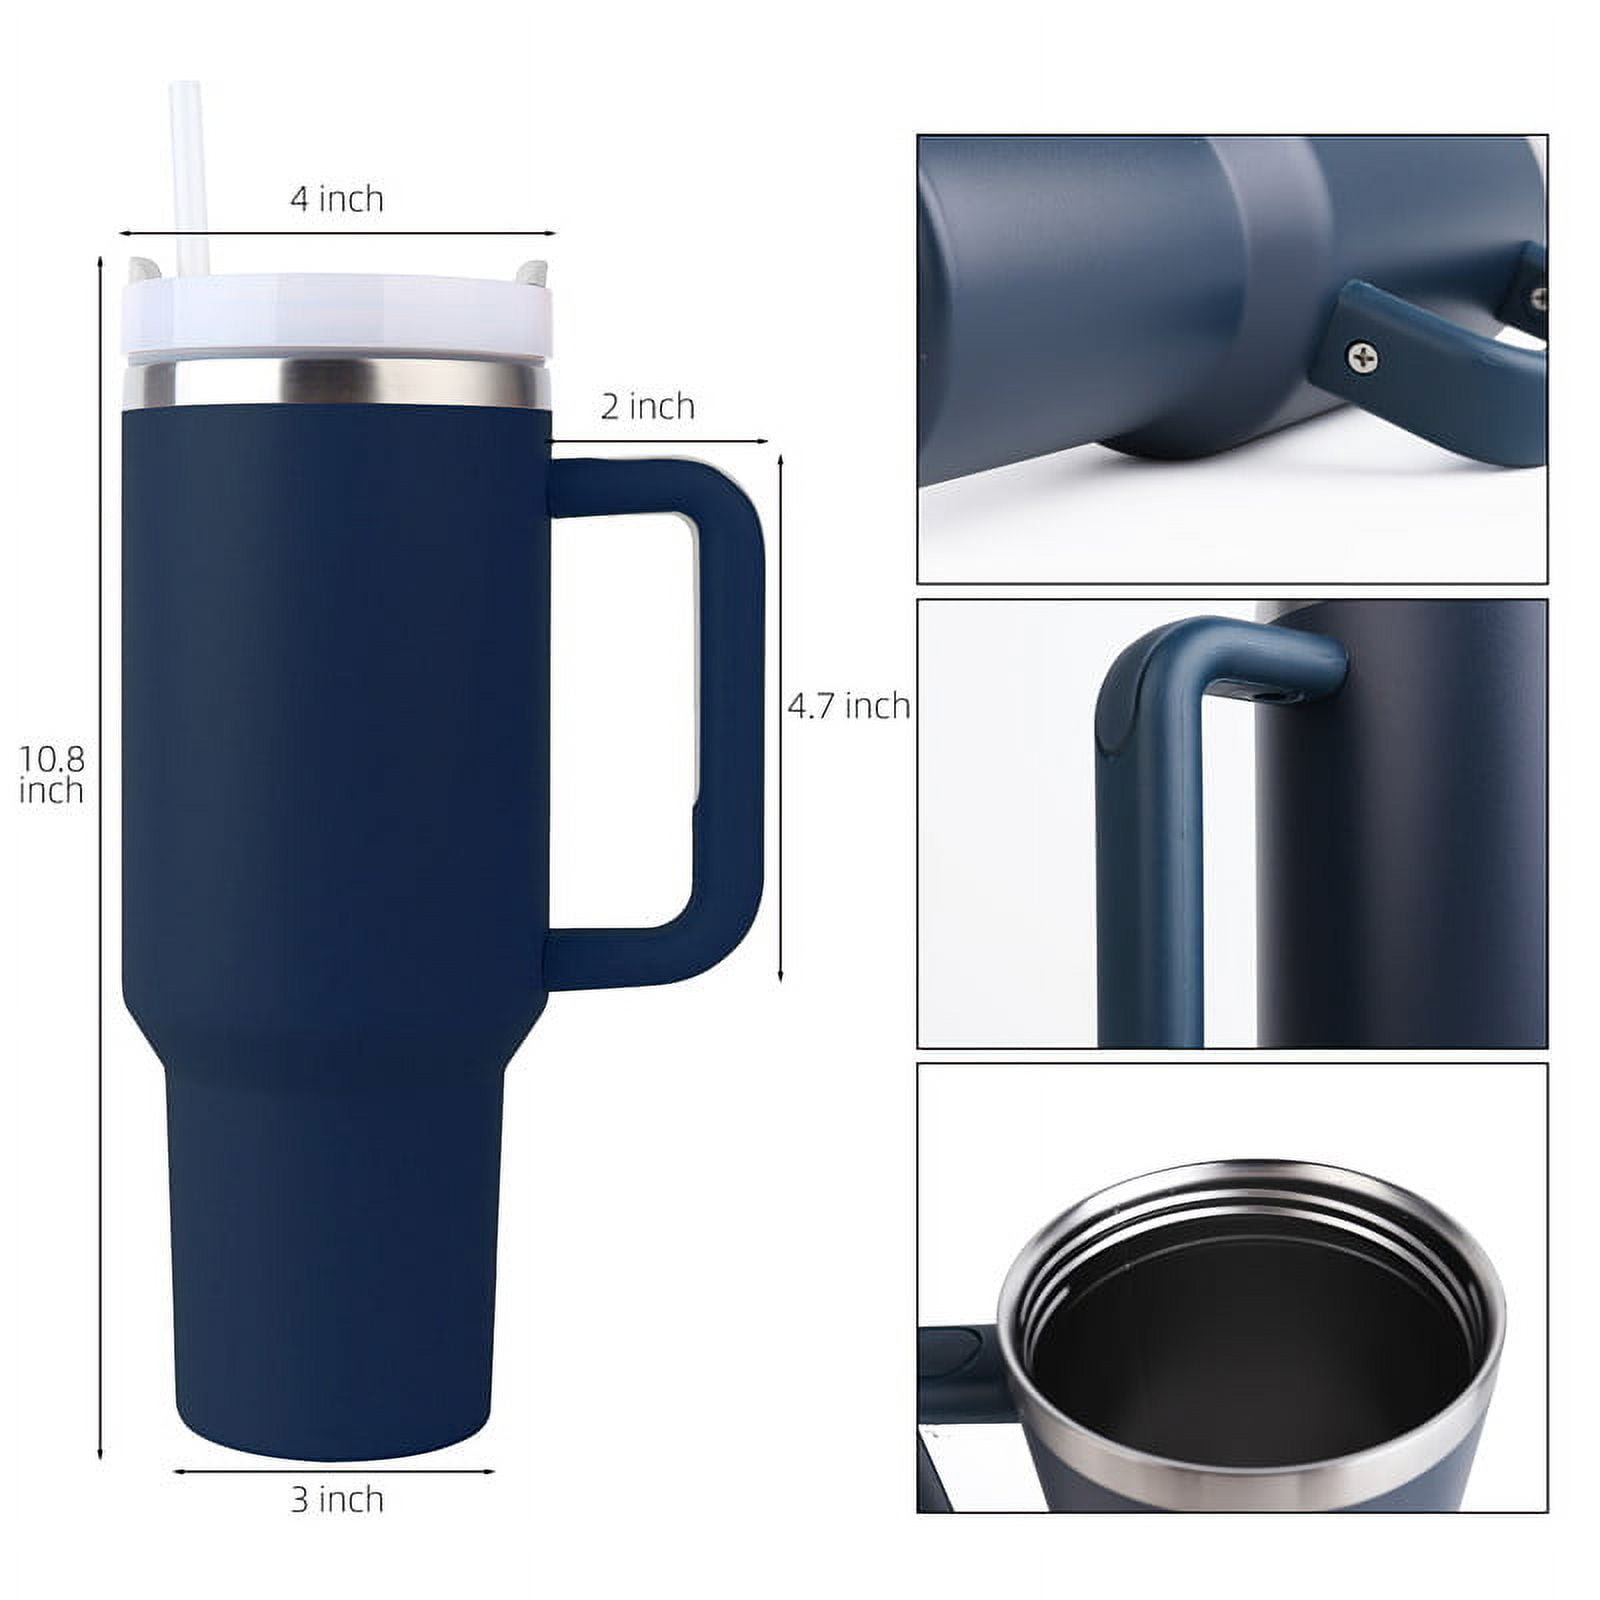  Intrepid Vacuum Mug with Straw - 40 oz. 165767